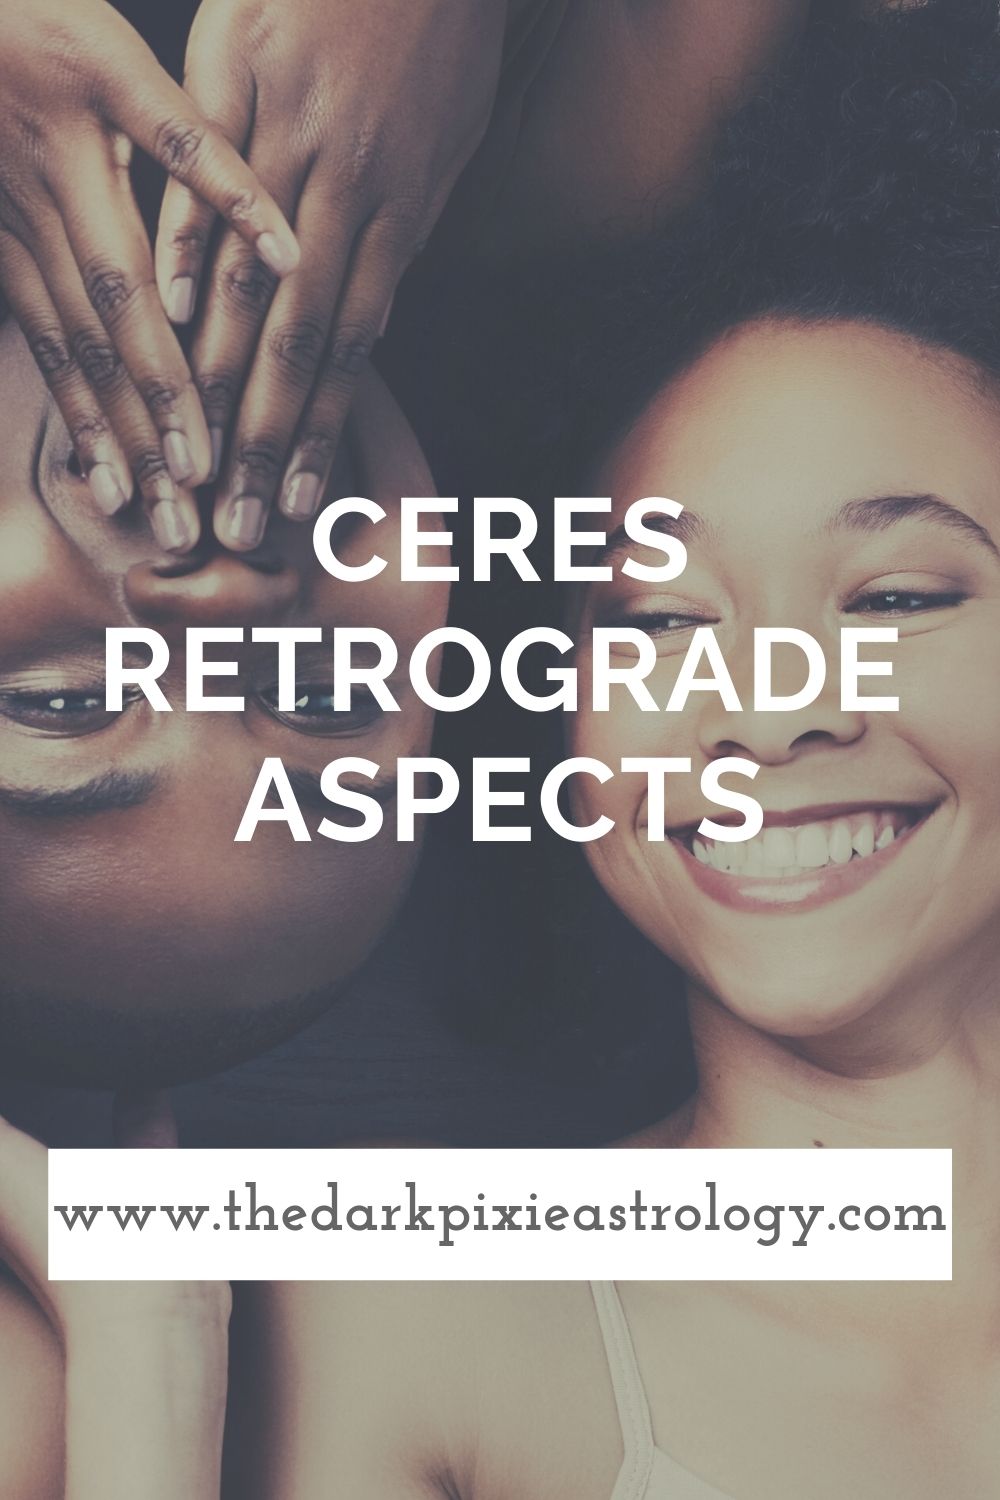 Ceres Retrograde Aspects - The Dark Pixie Astrology